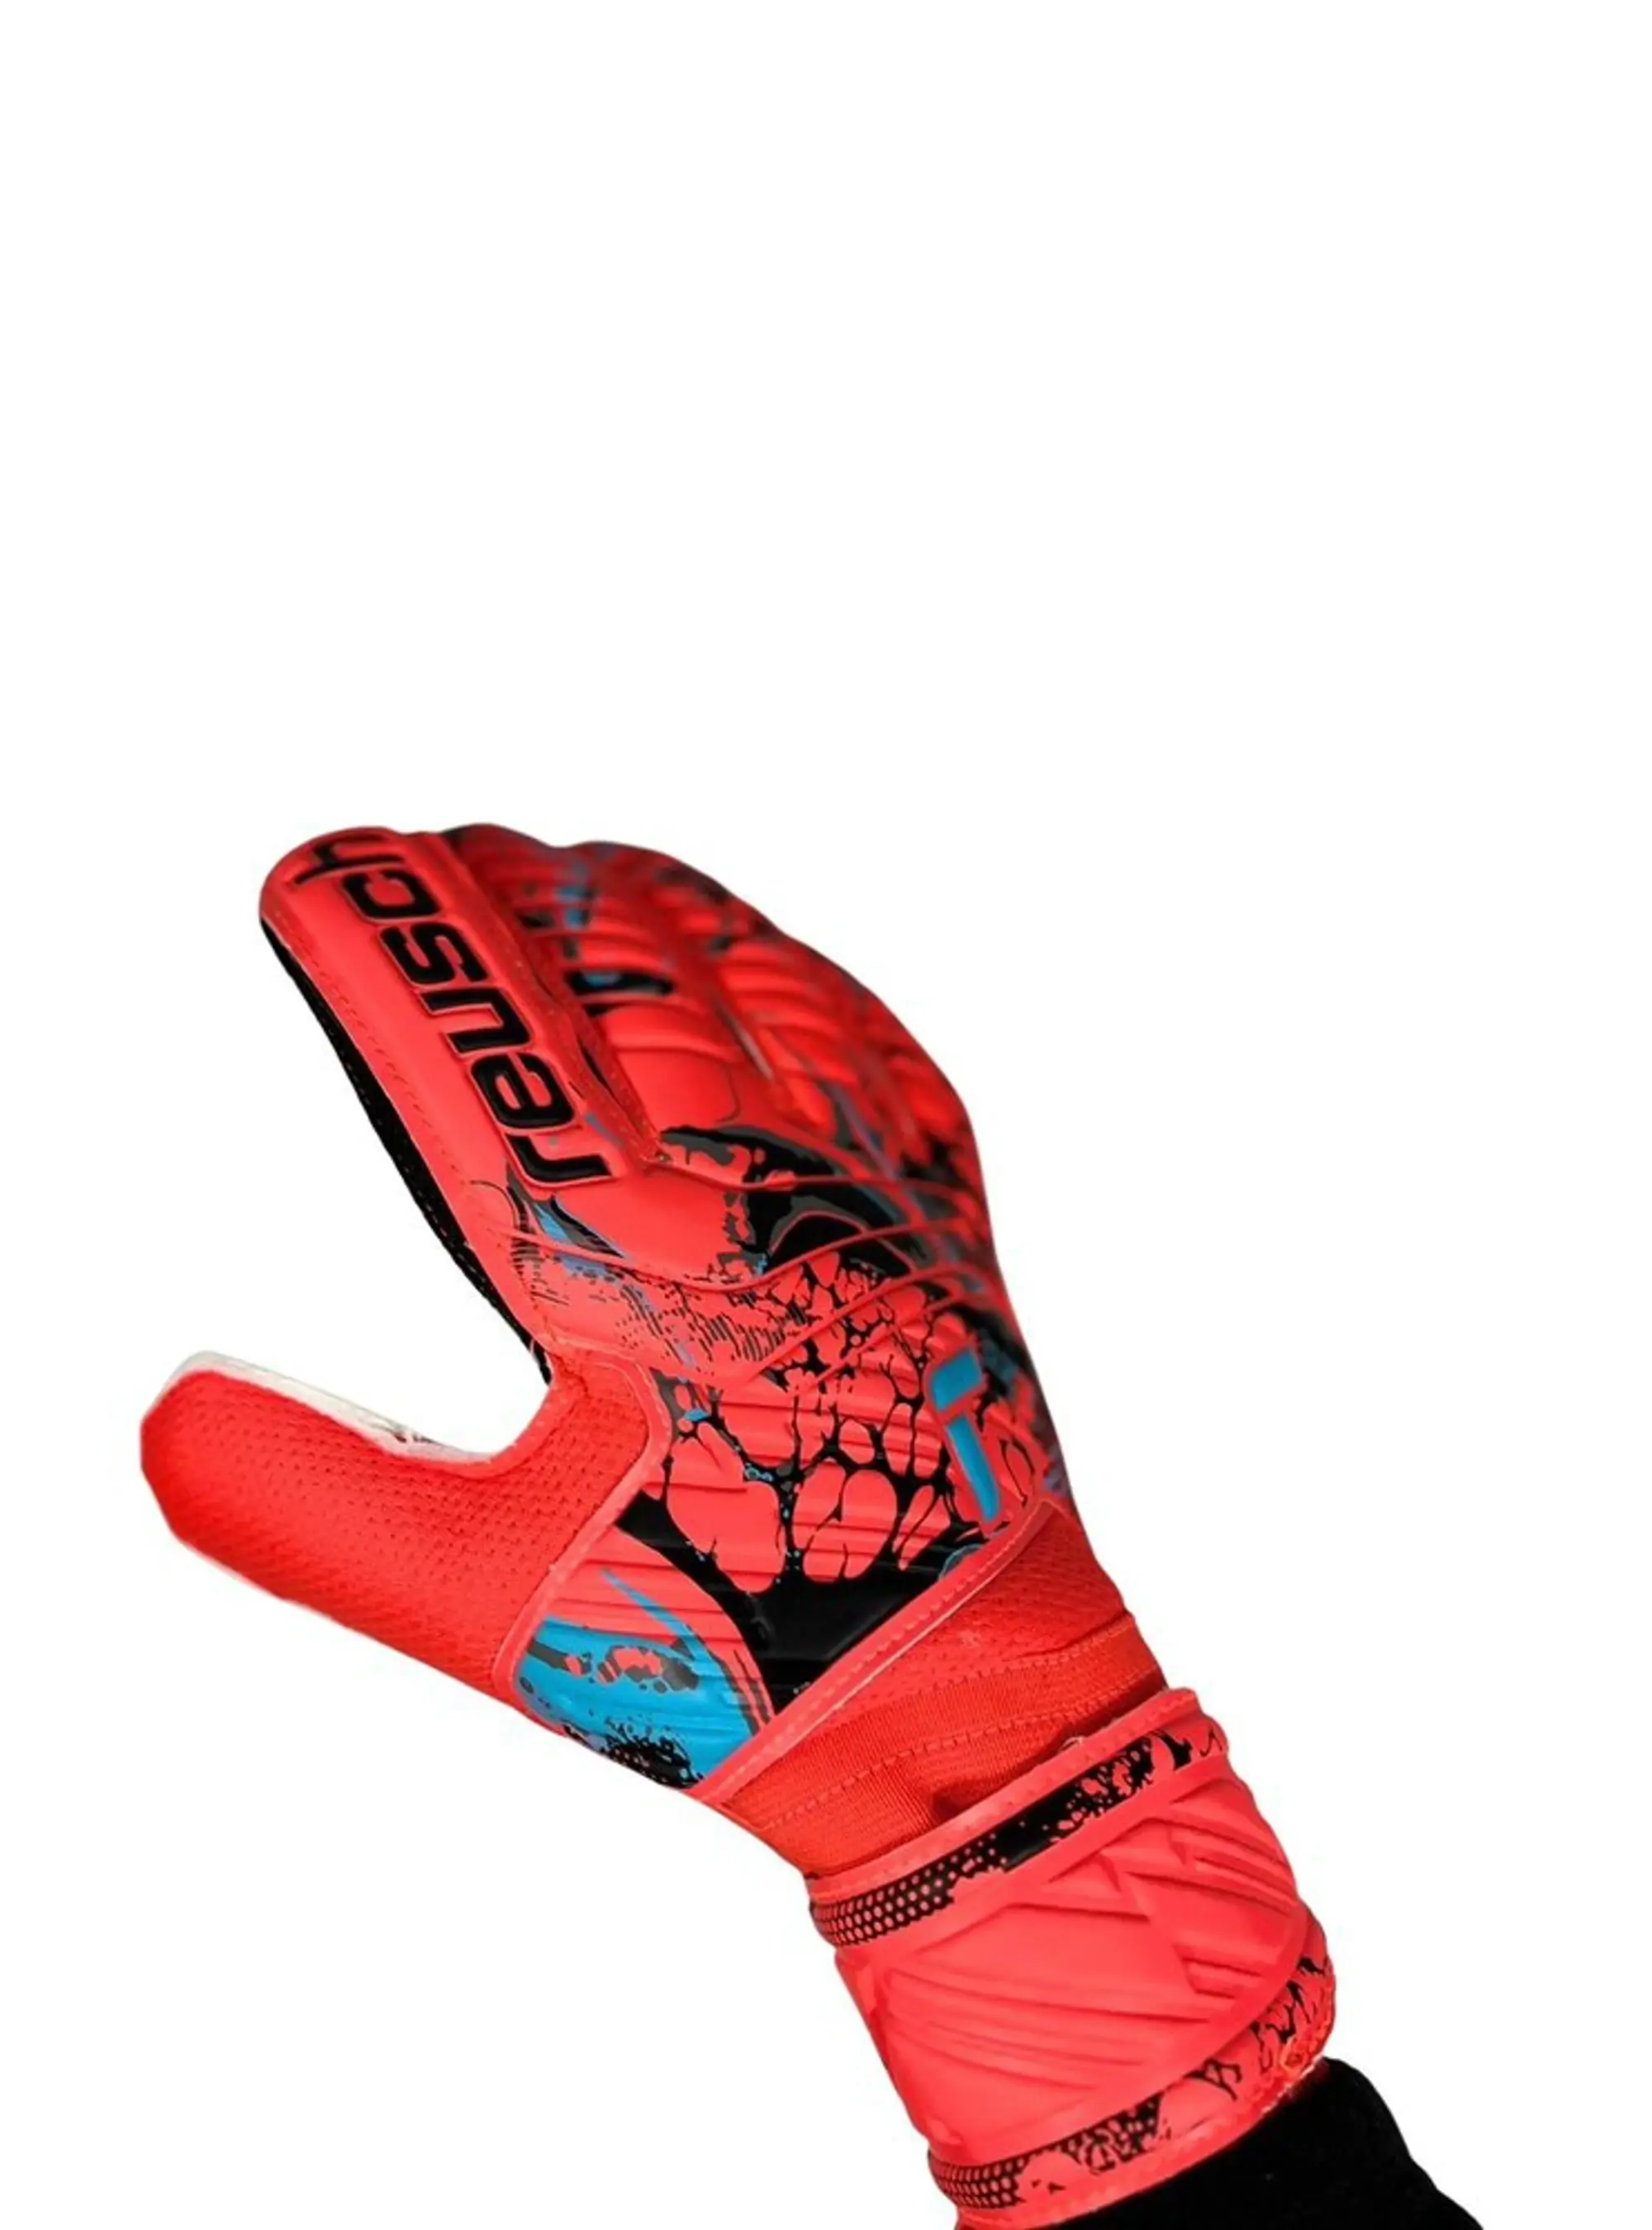 Reusch Attrakt Solid Junior Goalkeeper Gloves  7 -